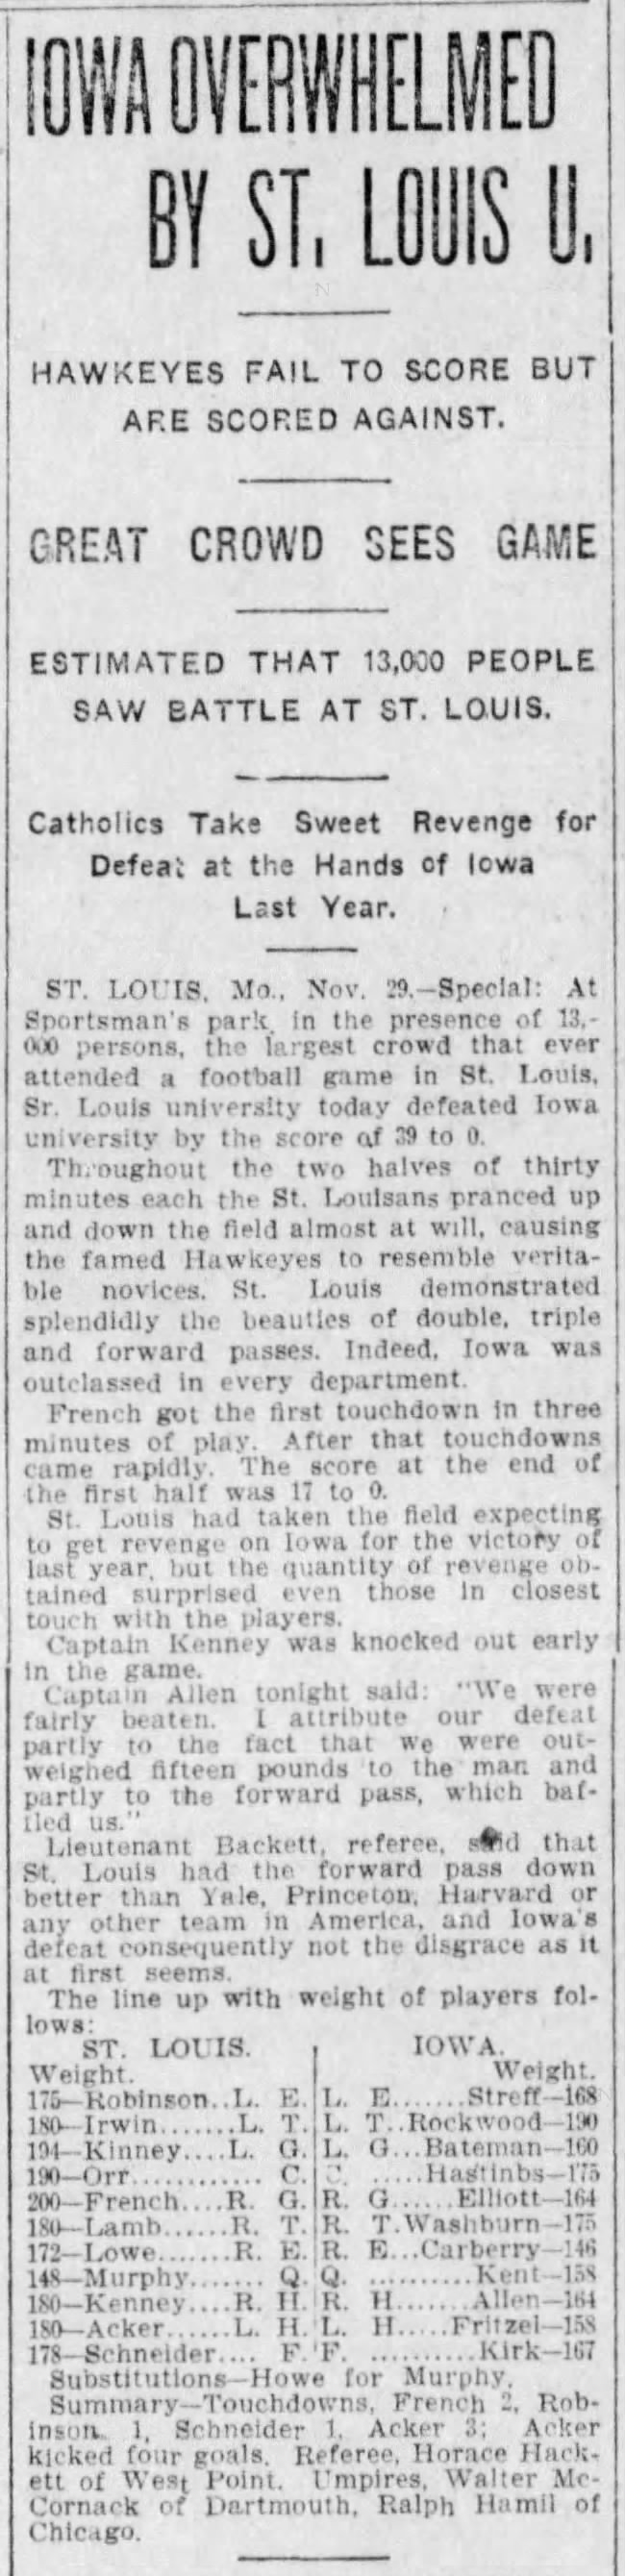 Iowa Overwhelmed by St. Louis U.